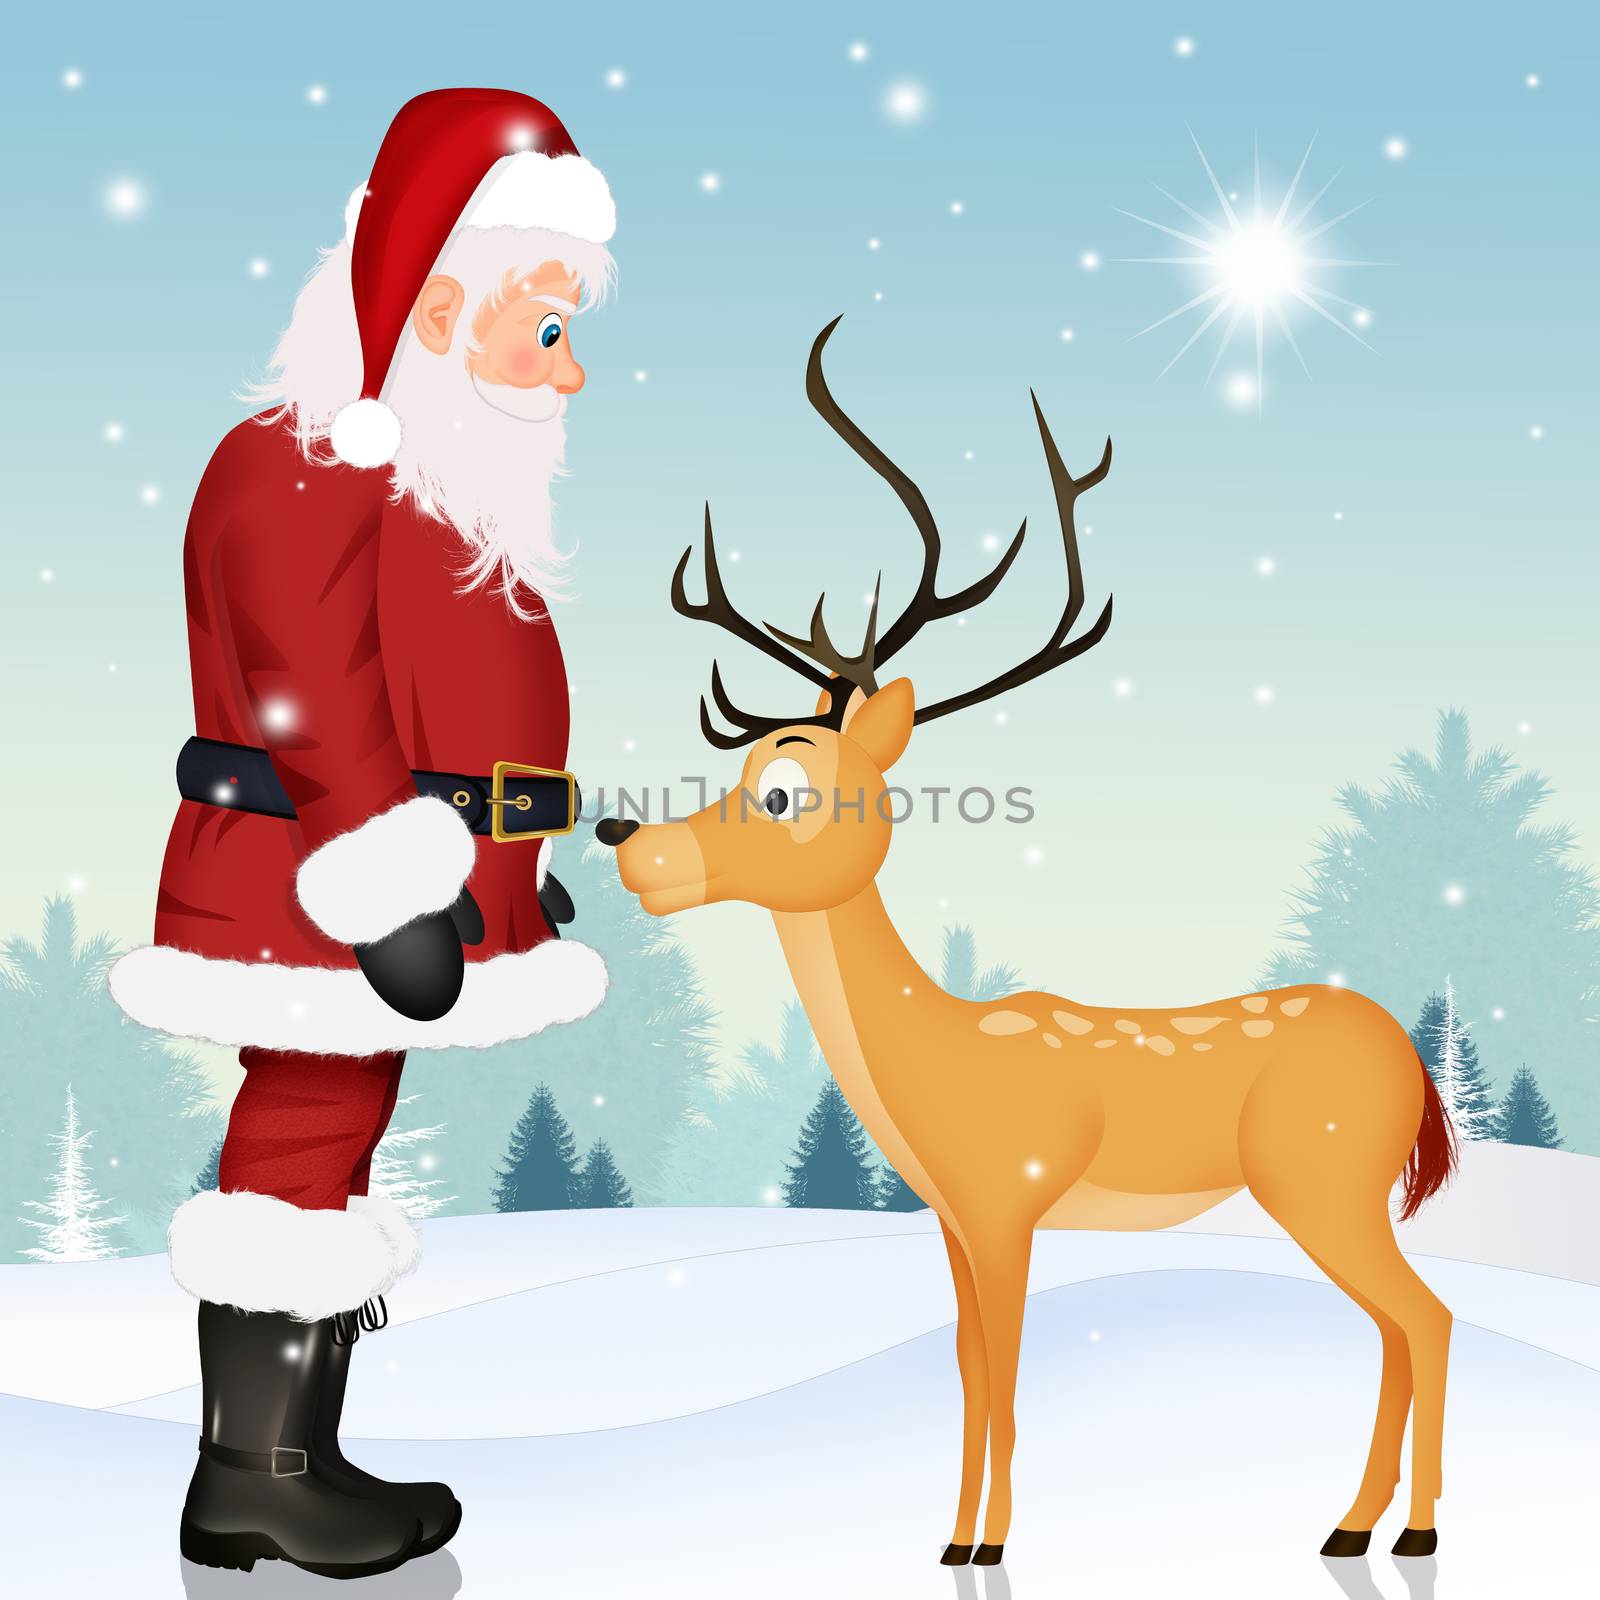 Santa Claus and reindeer by adrenalina